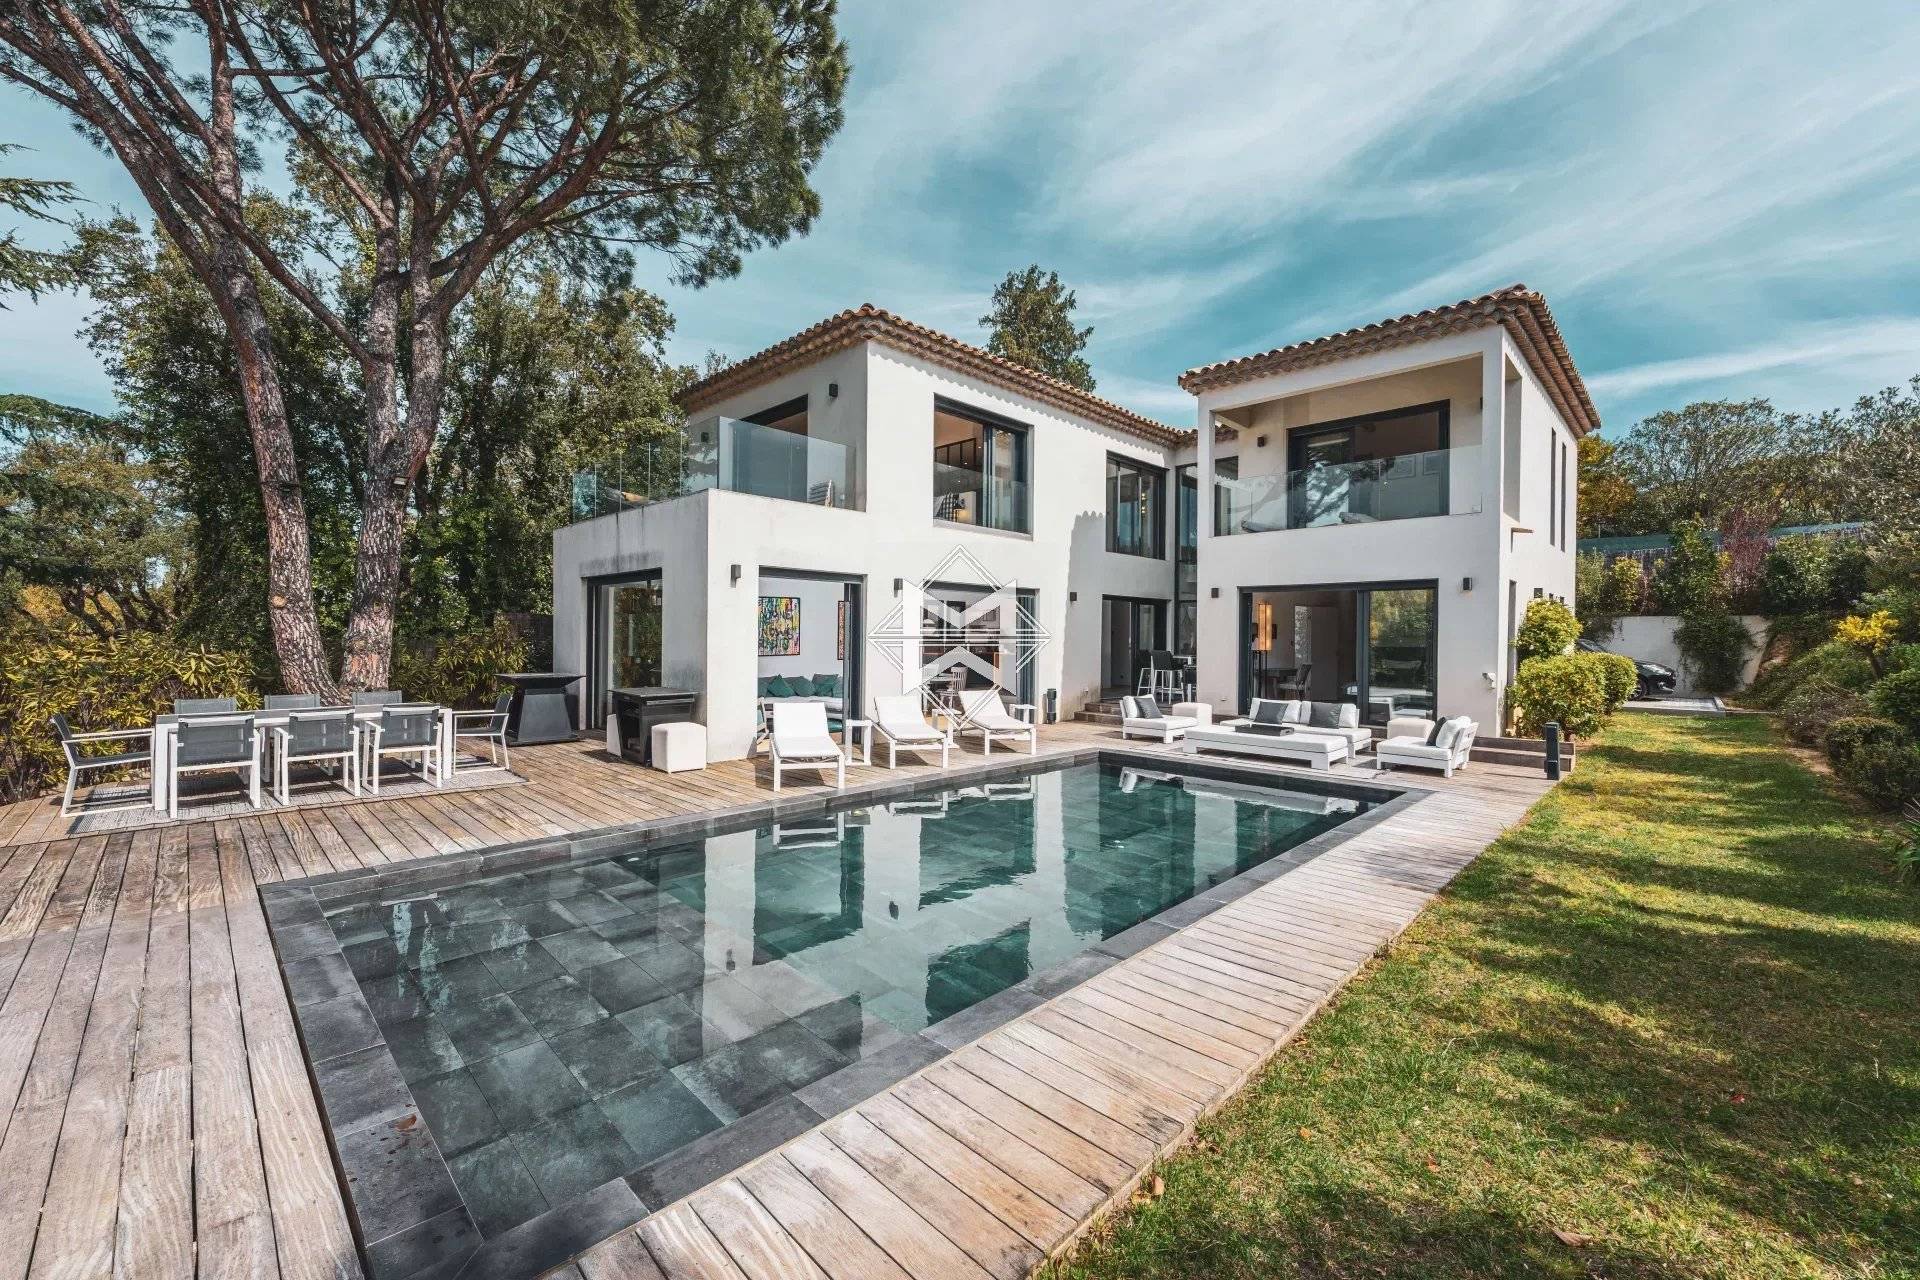 Beautiful modern villa with fine finishes